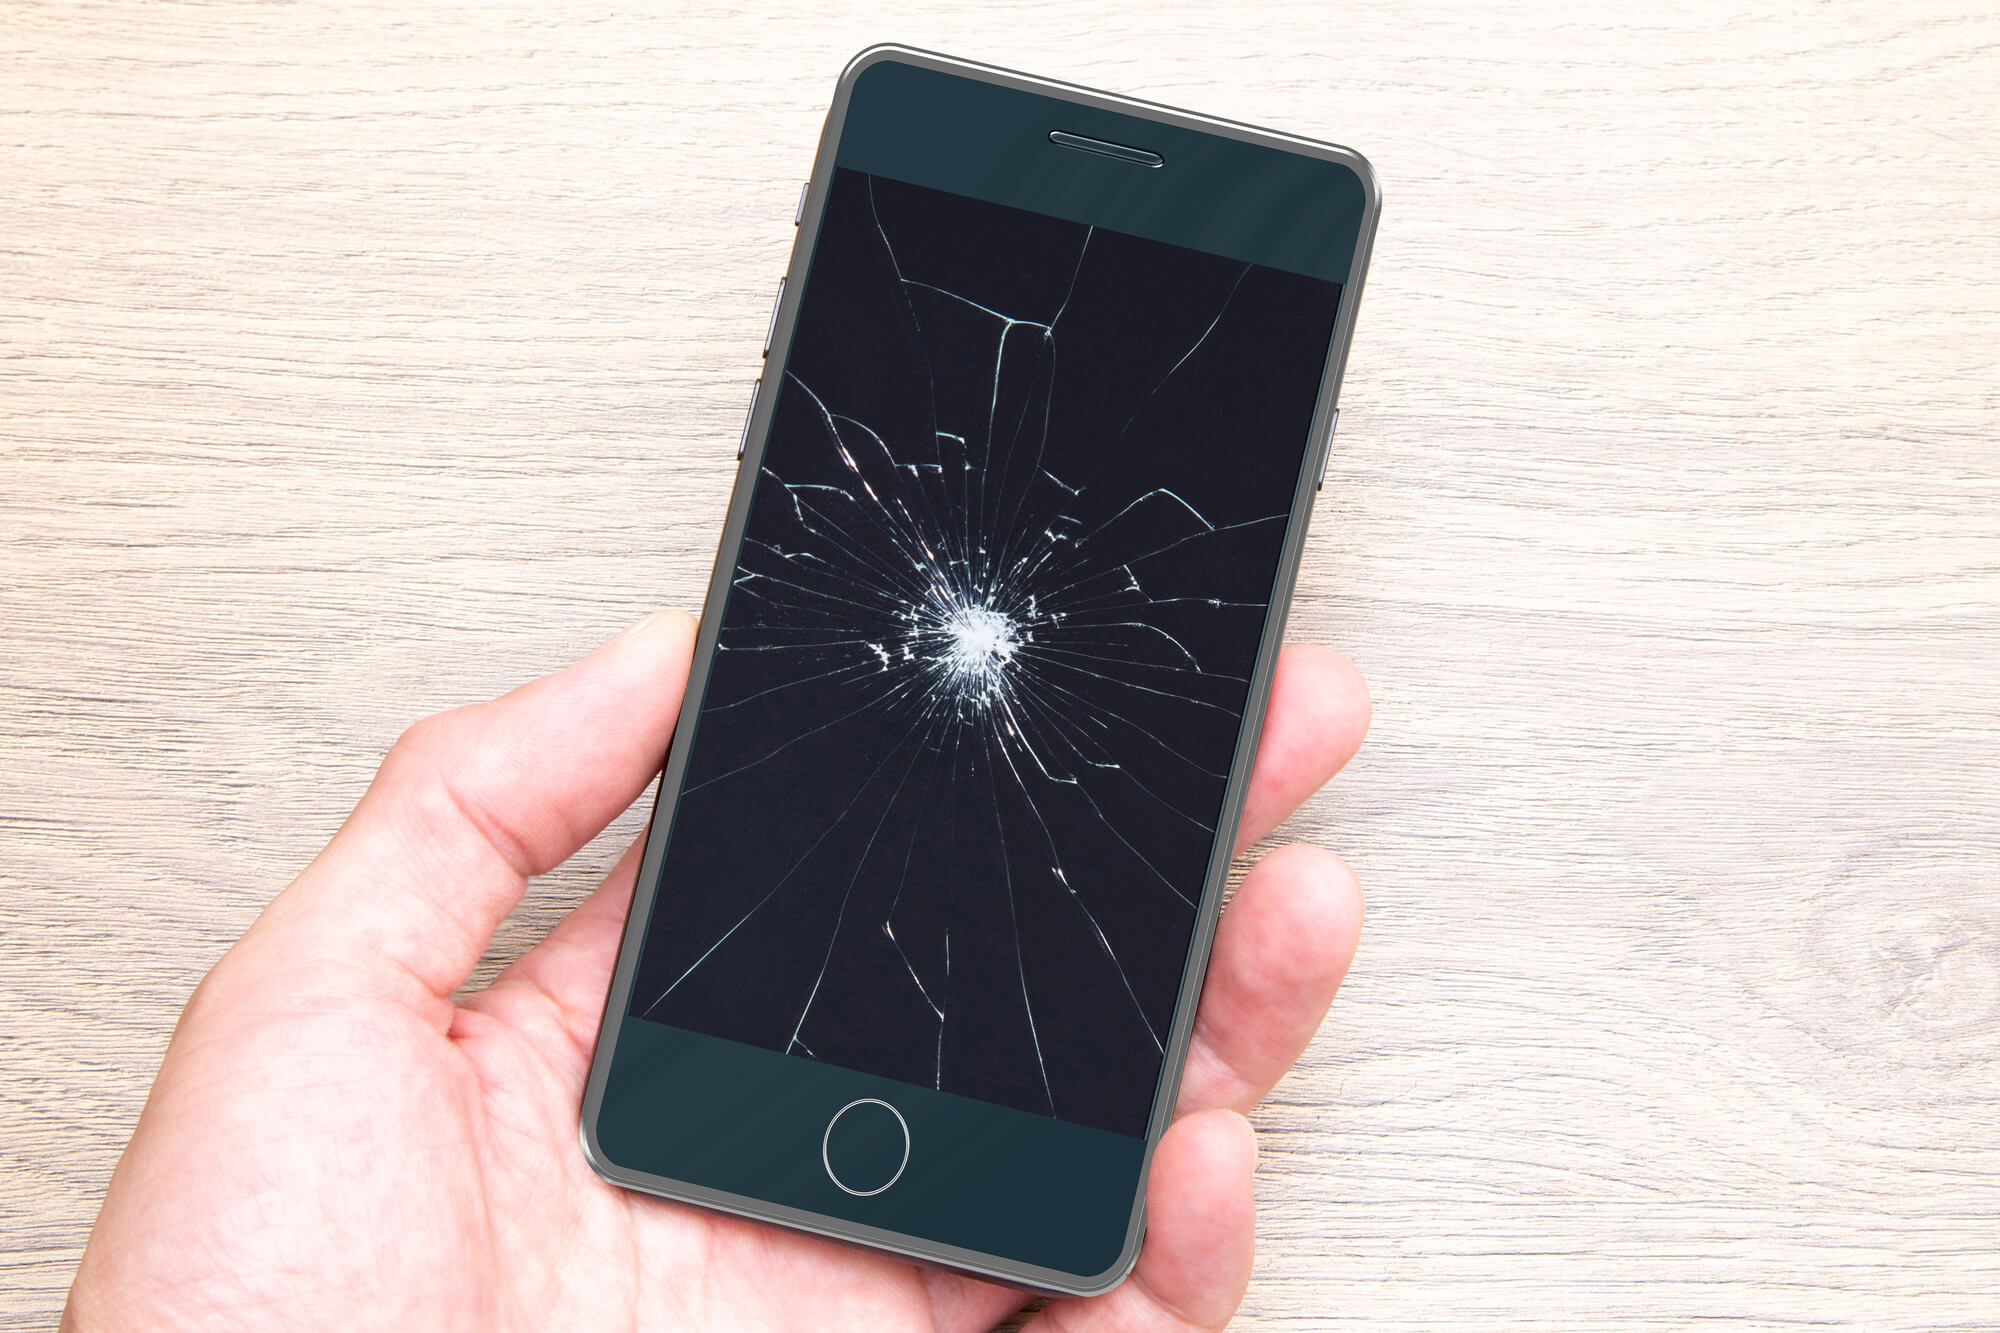 iPhoneの画面が割れたまま使うリスクとは？画面が割れた際の対処法について